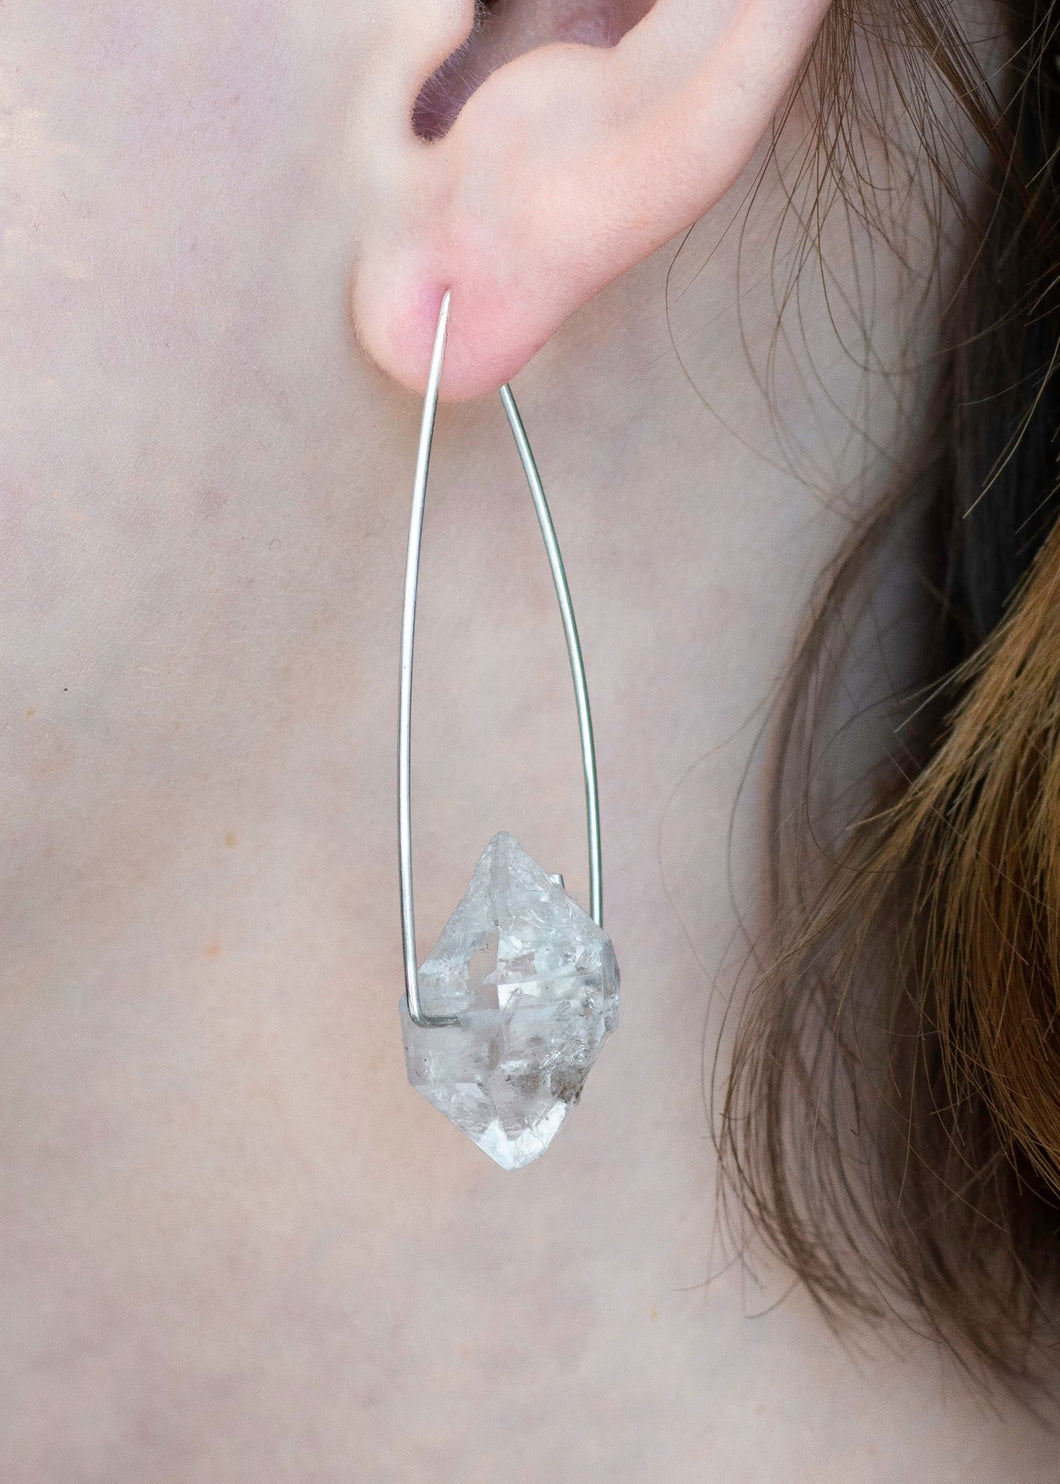 Aimee Petkus Open Triangular Stone Hoops SS Herkimer Diamonds Earrings